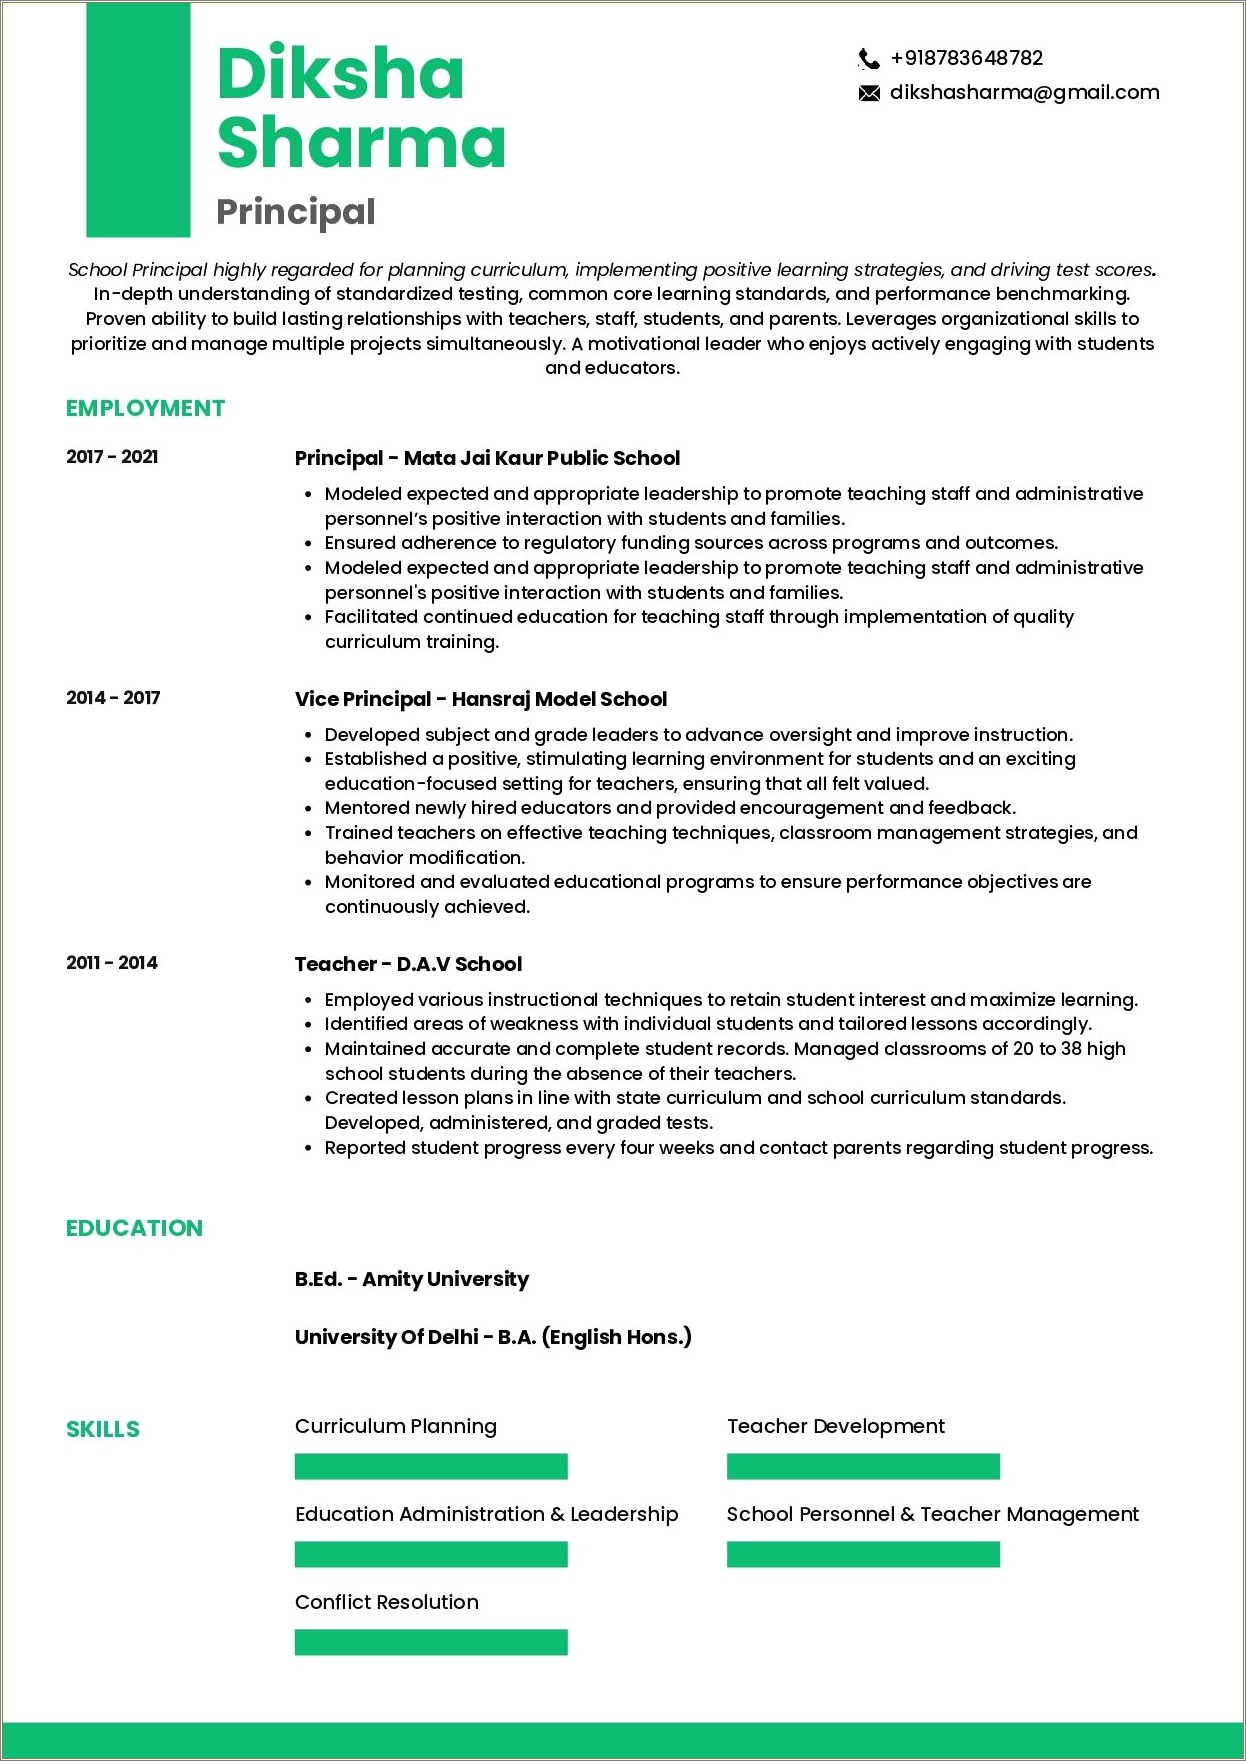 Sample Resume Job Summary For A School Principal